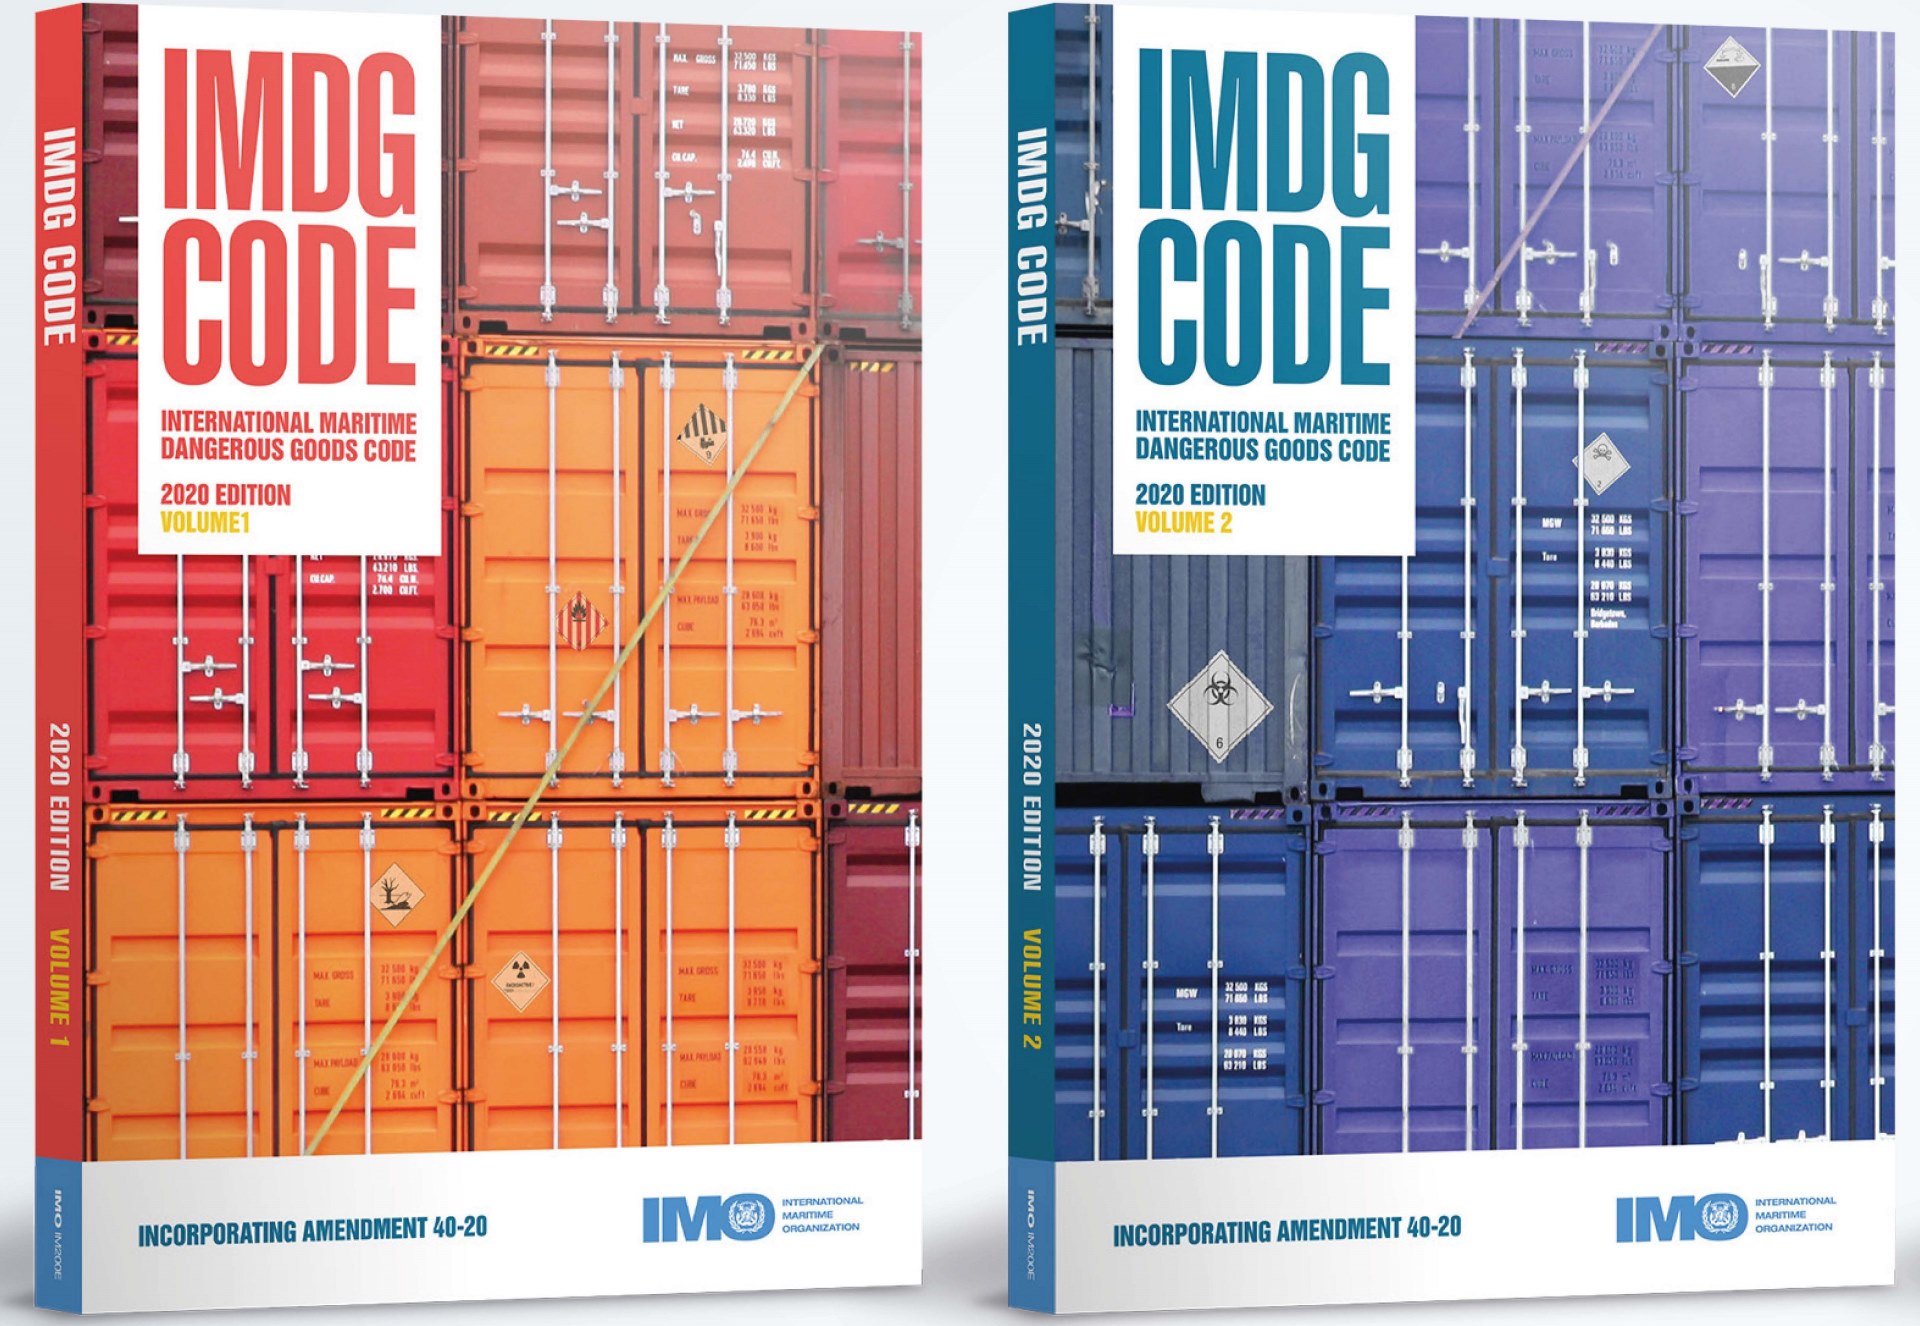 IMO releases IMDG CODE, 2020 Edition (incorporating Amendment 4020